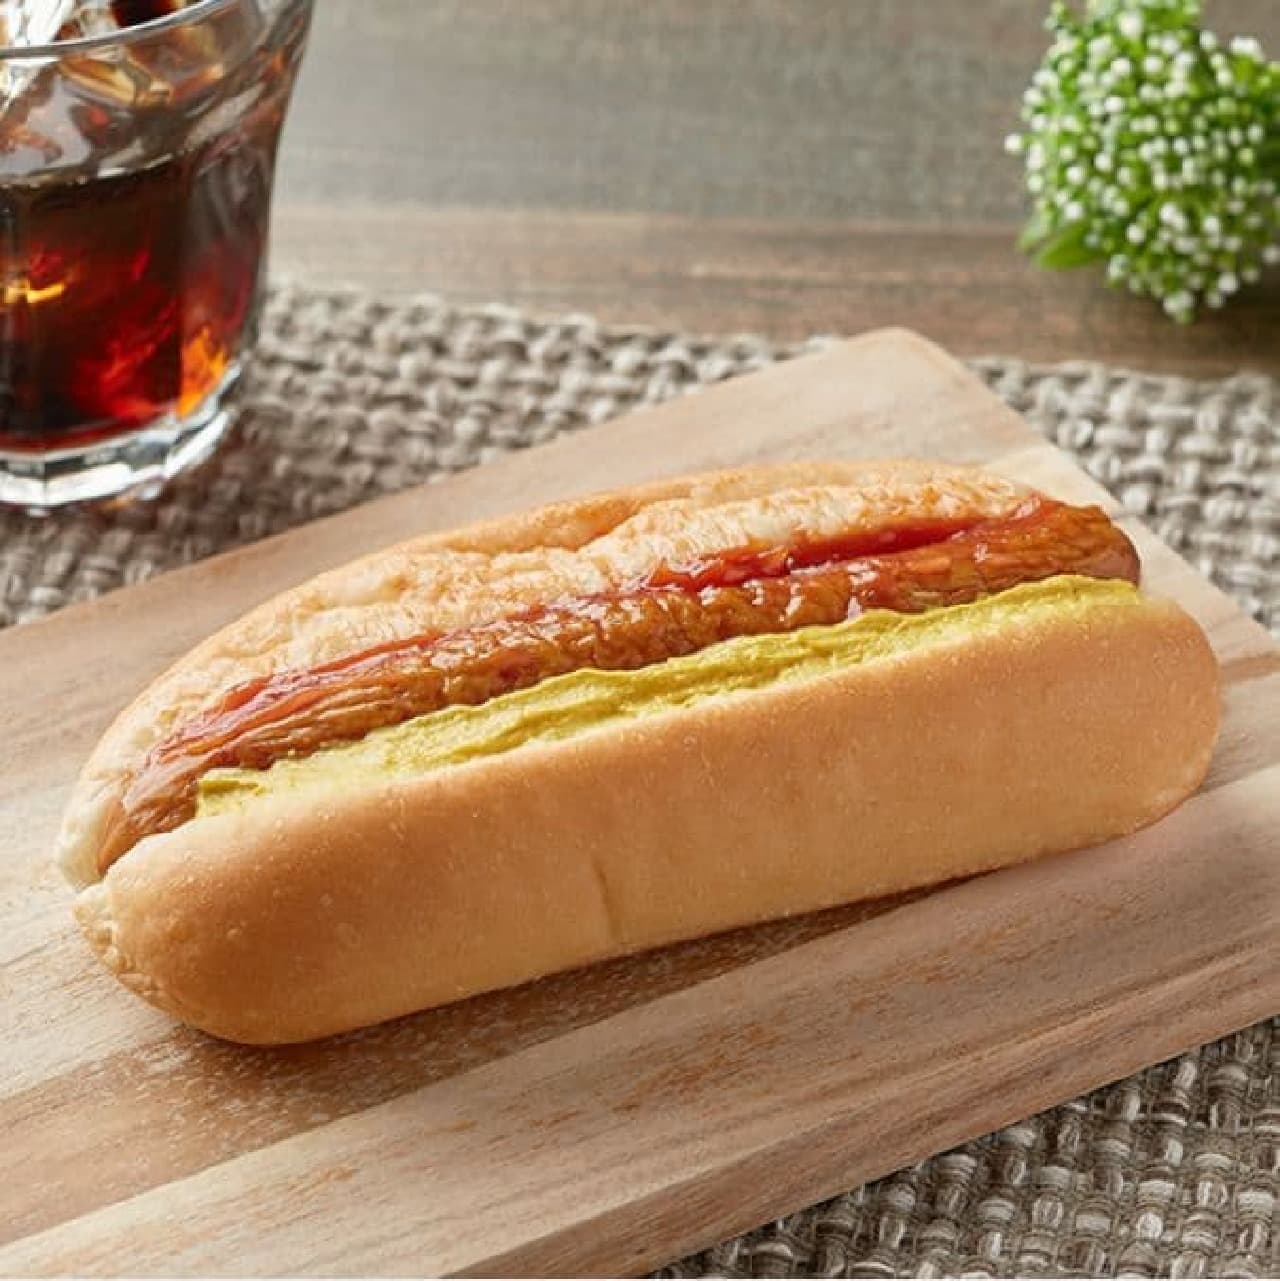 FamilyMart "Hot Dog